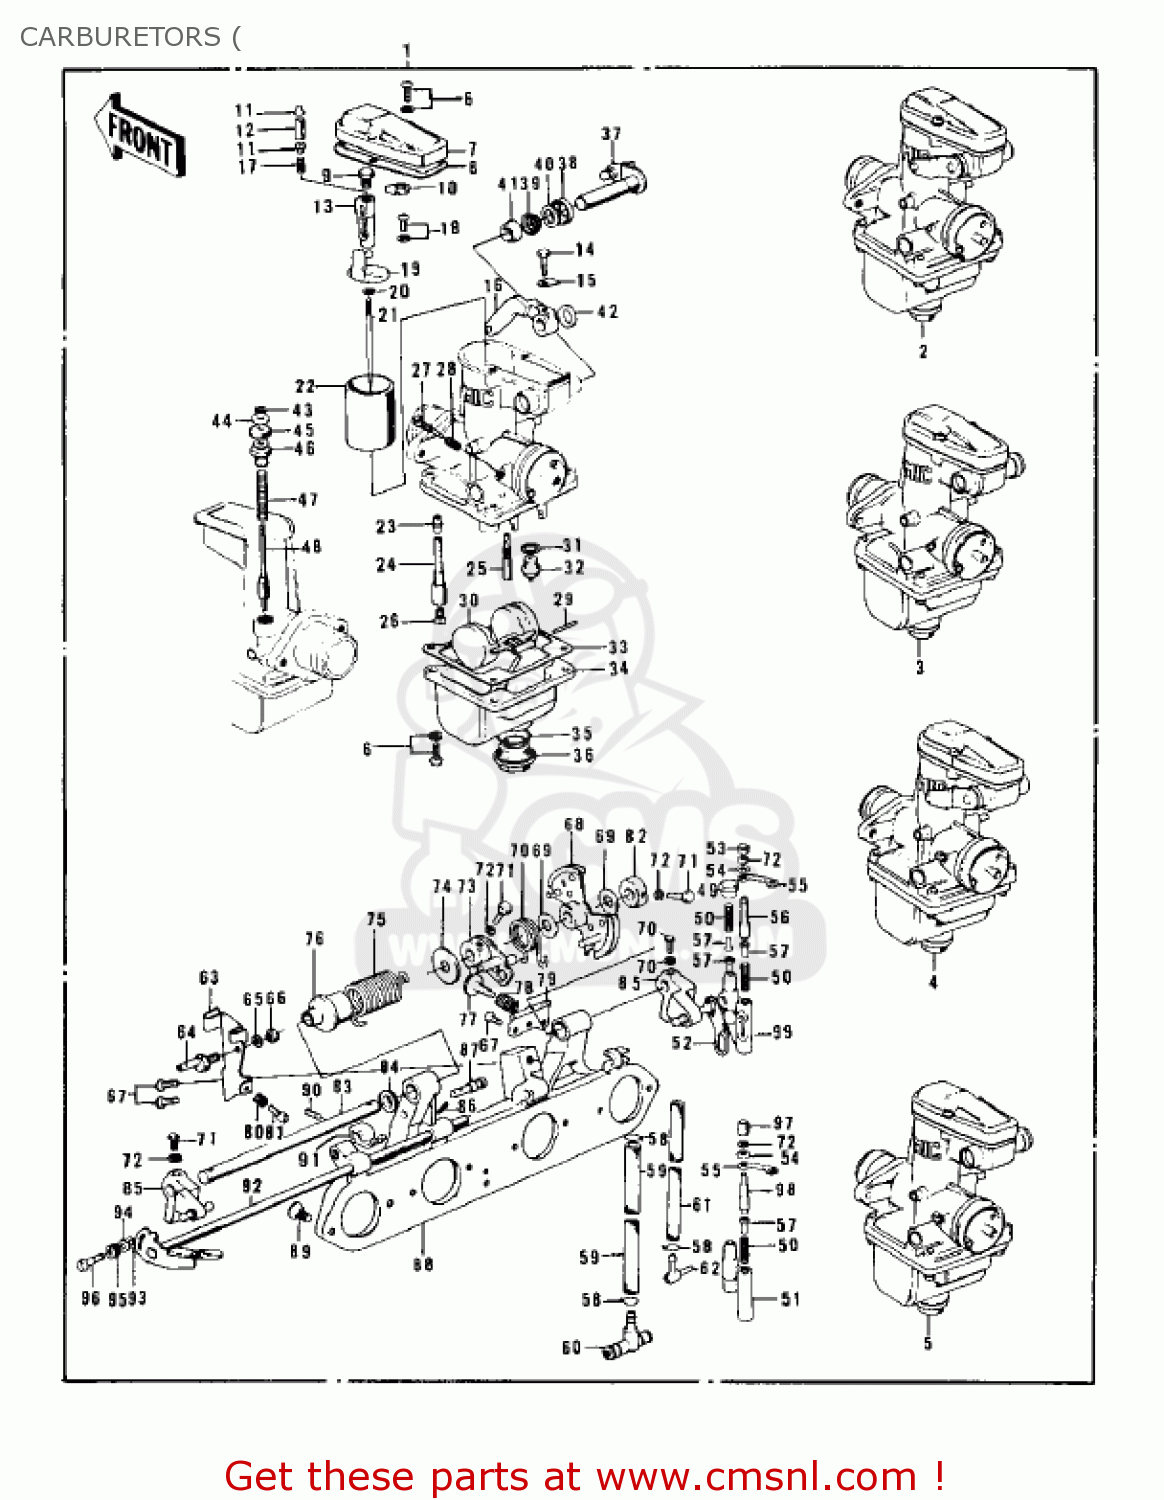 kawasaki-z1-1973-usa-carburetors_bigkar119461215_1e1b.gif